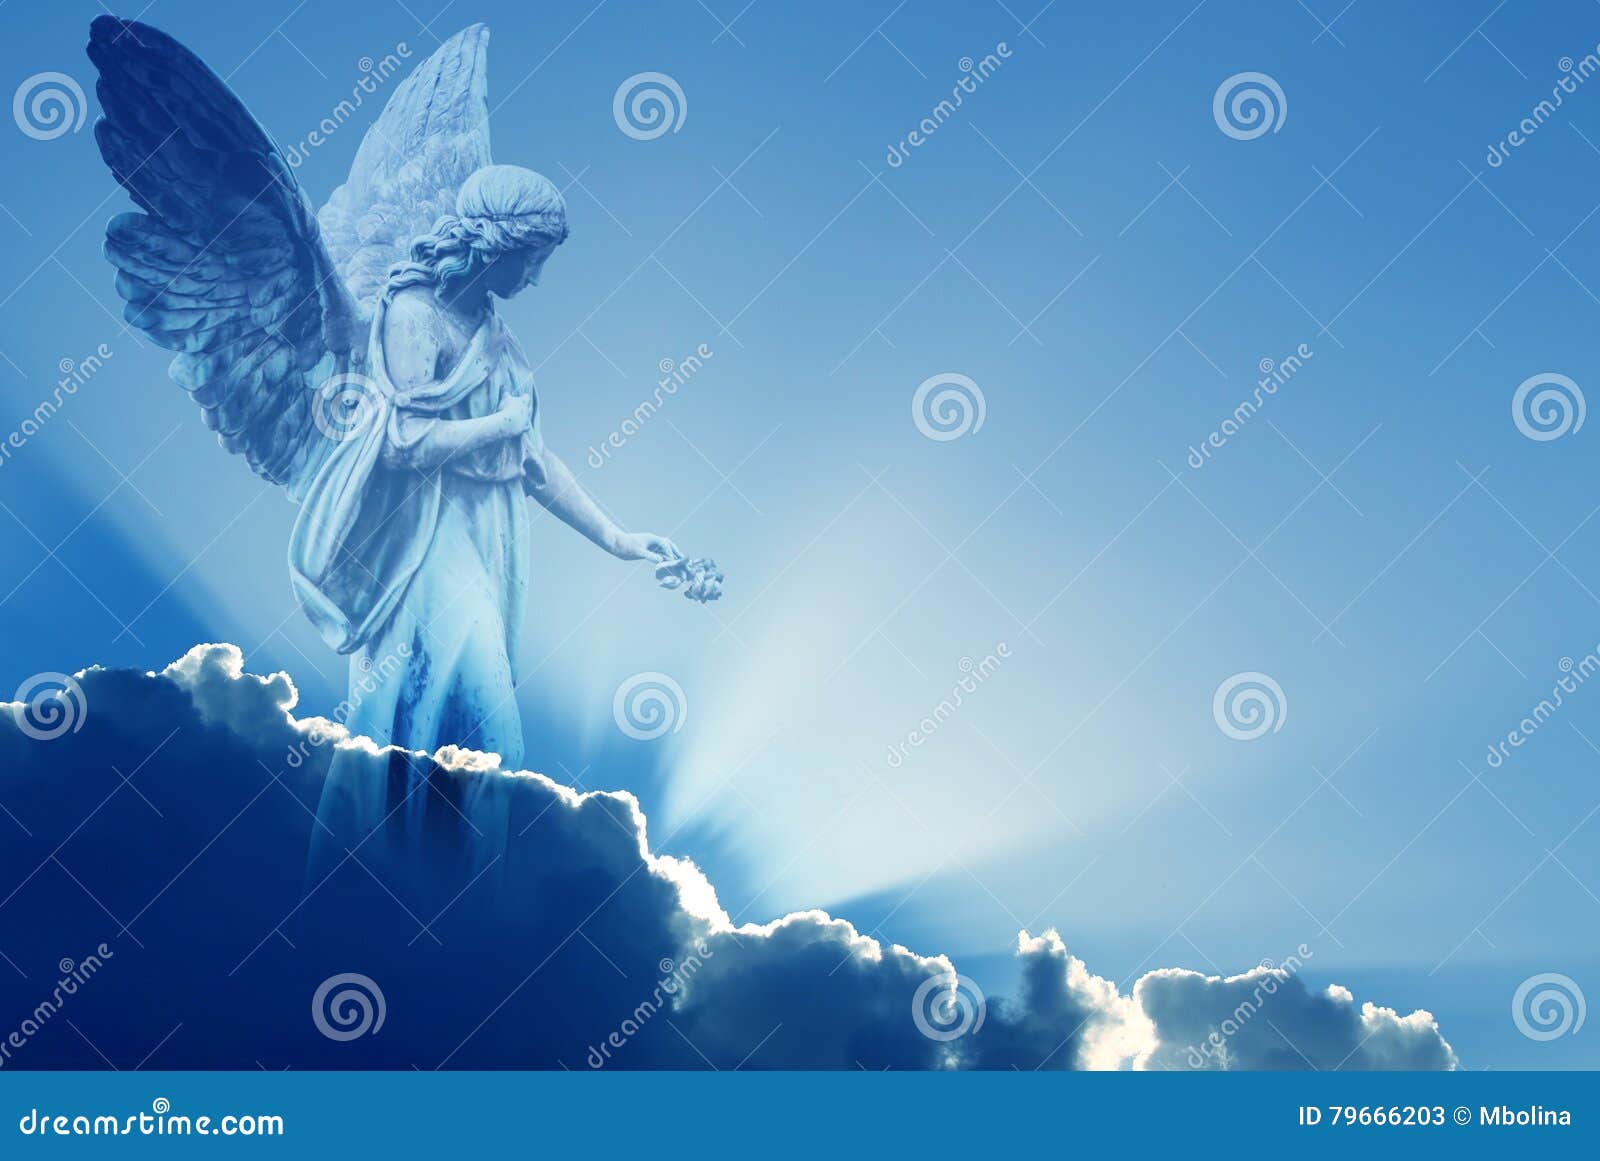 Beautiful angel in heaven stock image. Image of heaven - 79666203